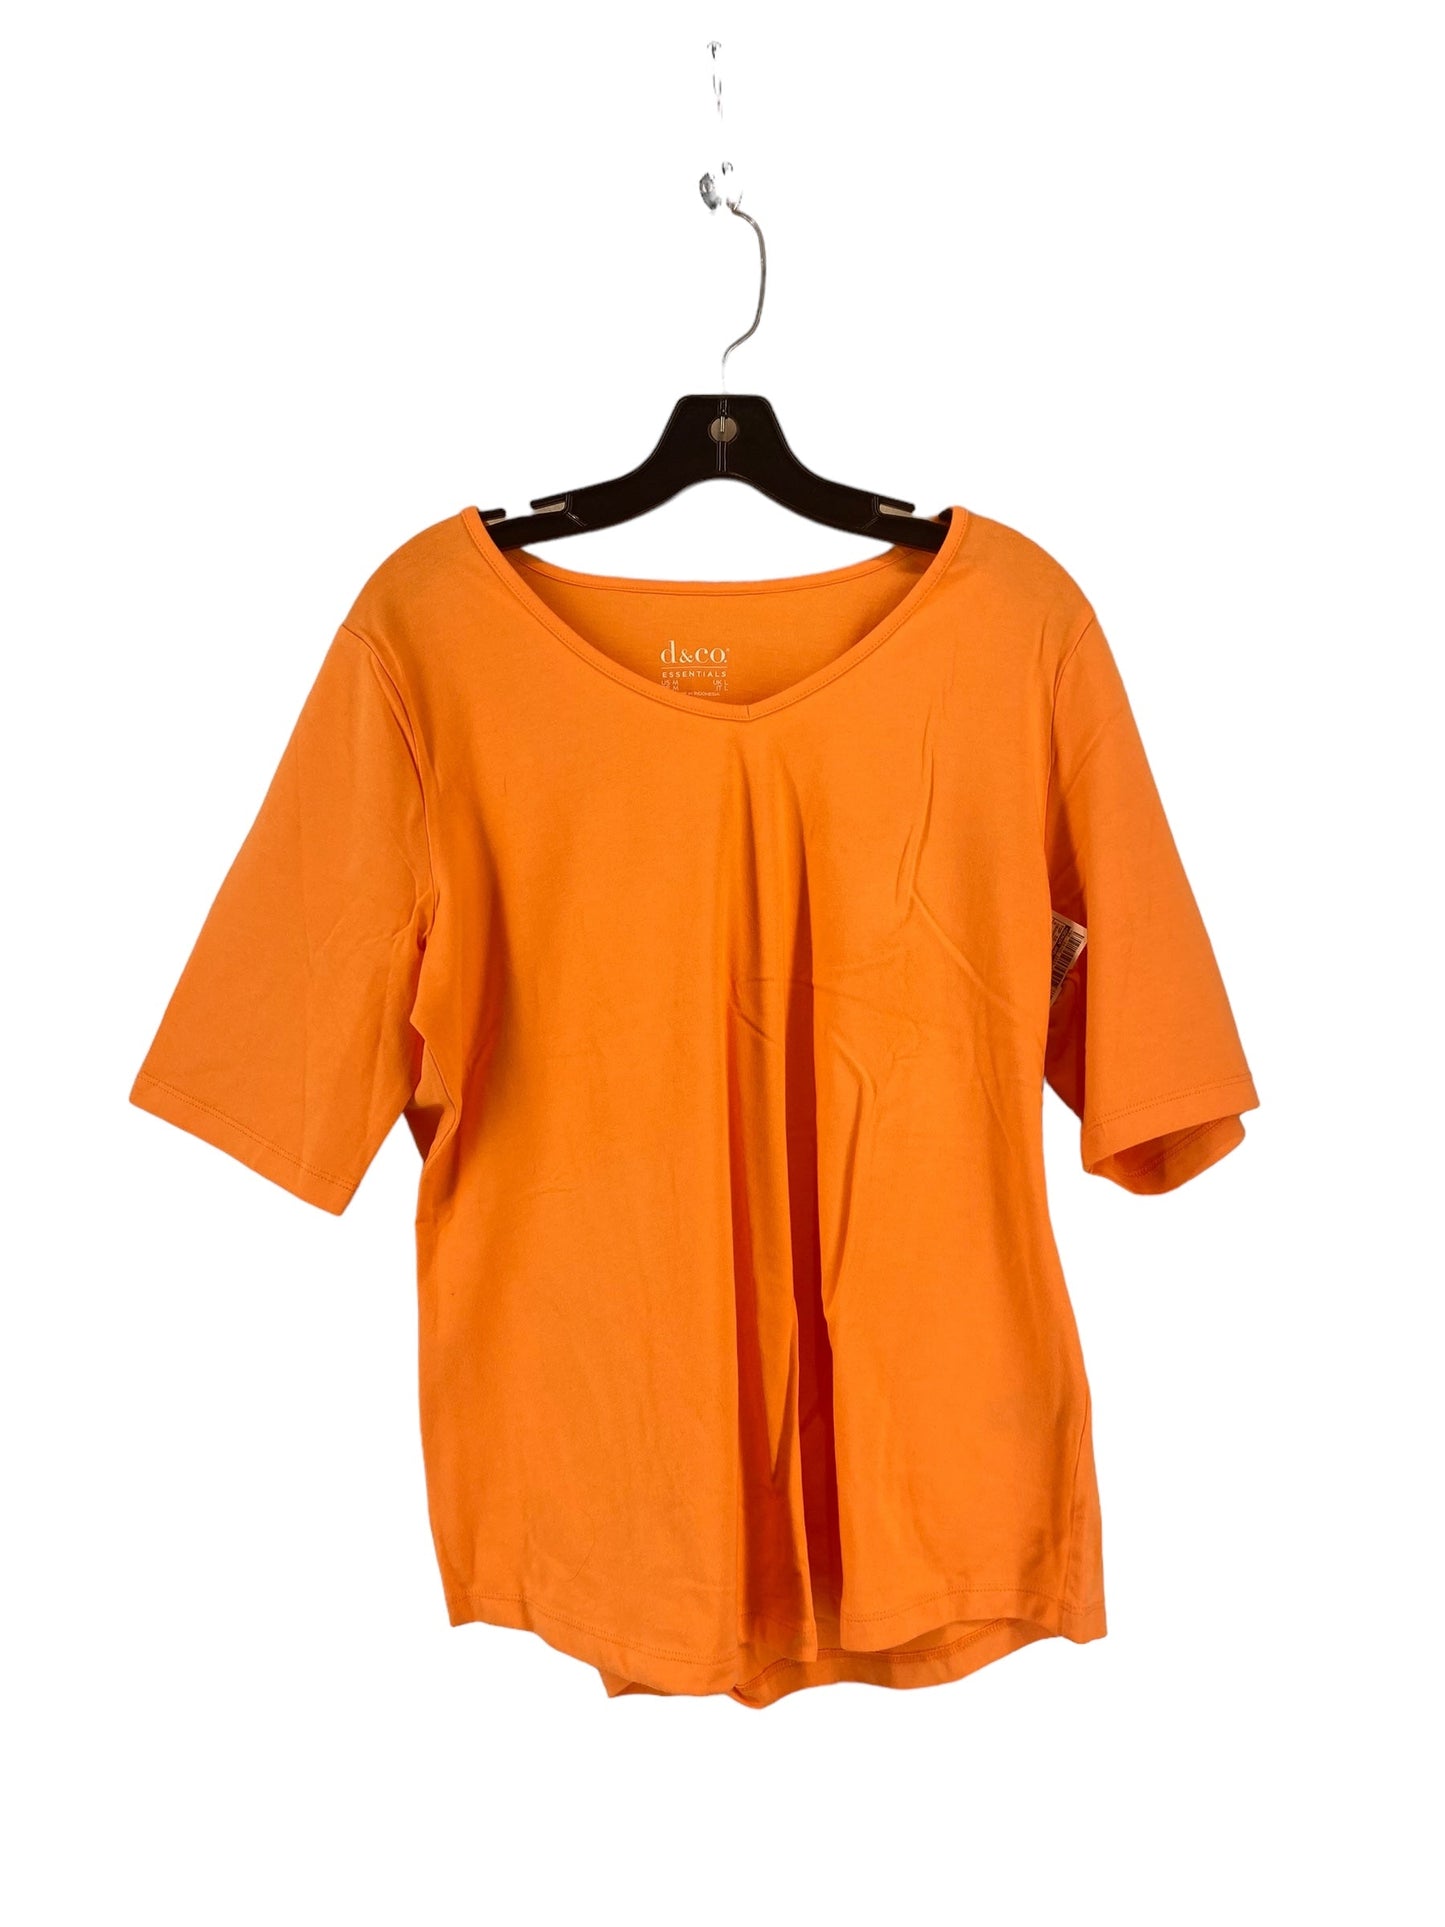 Orange Top Short Sleeve Denim And Company, Size M